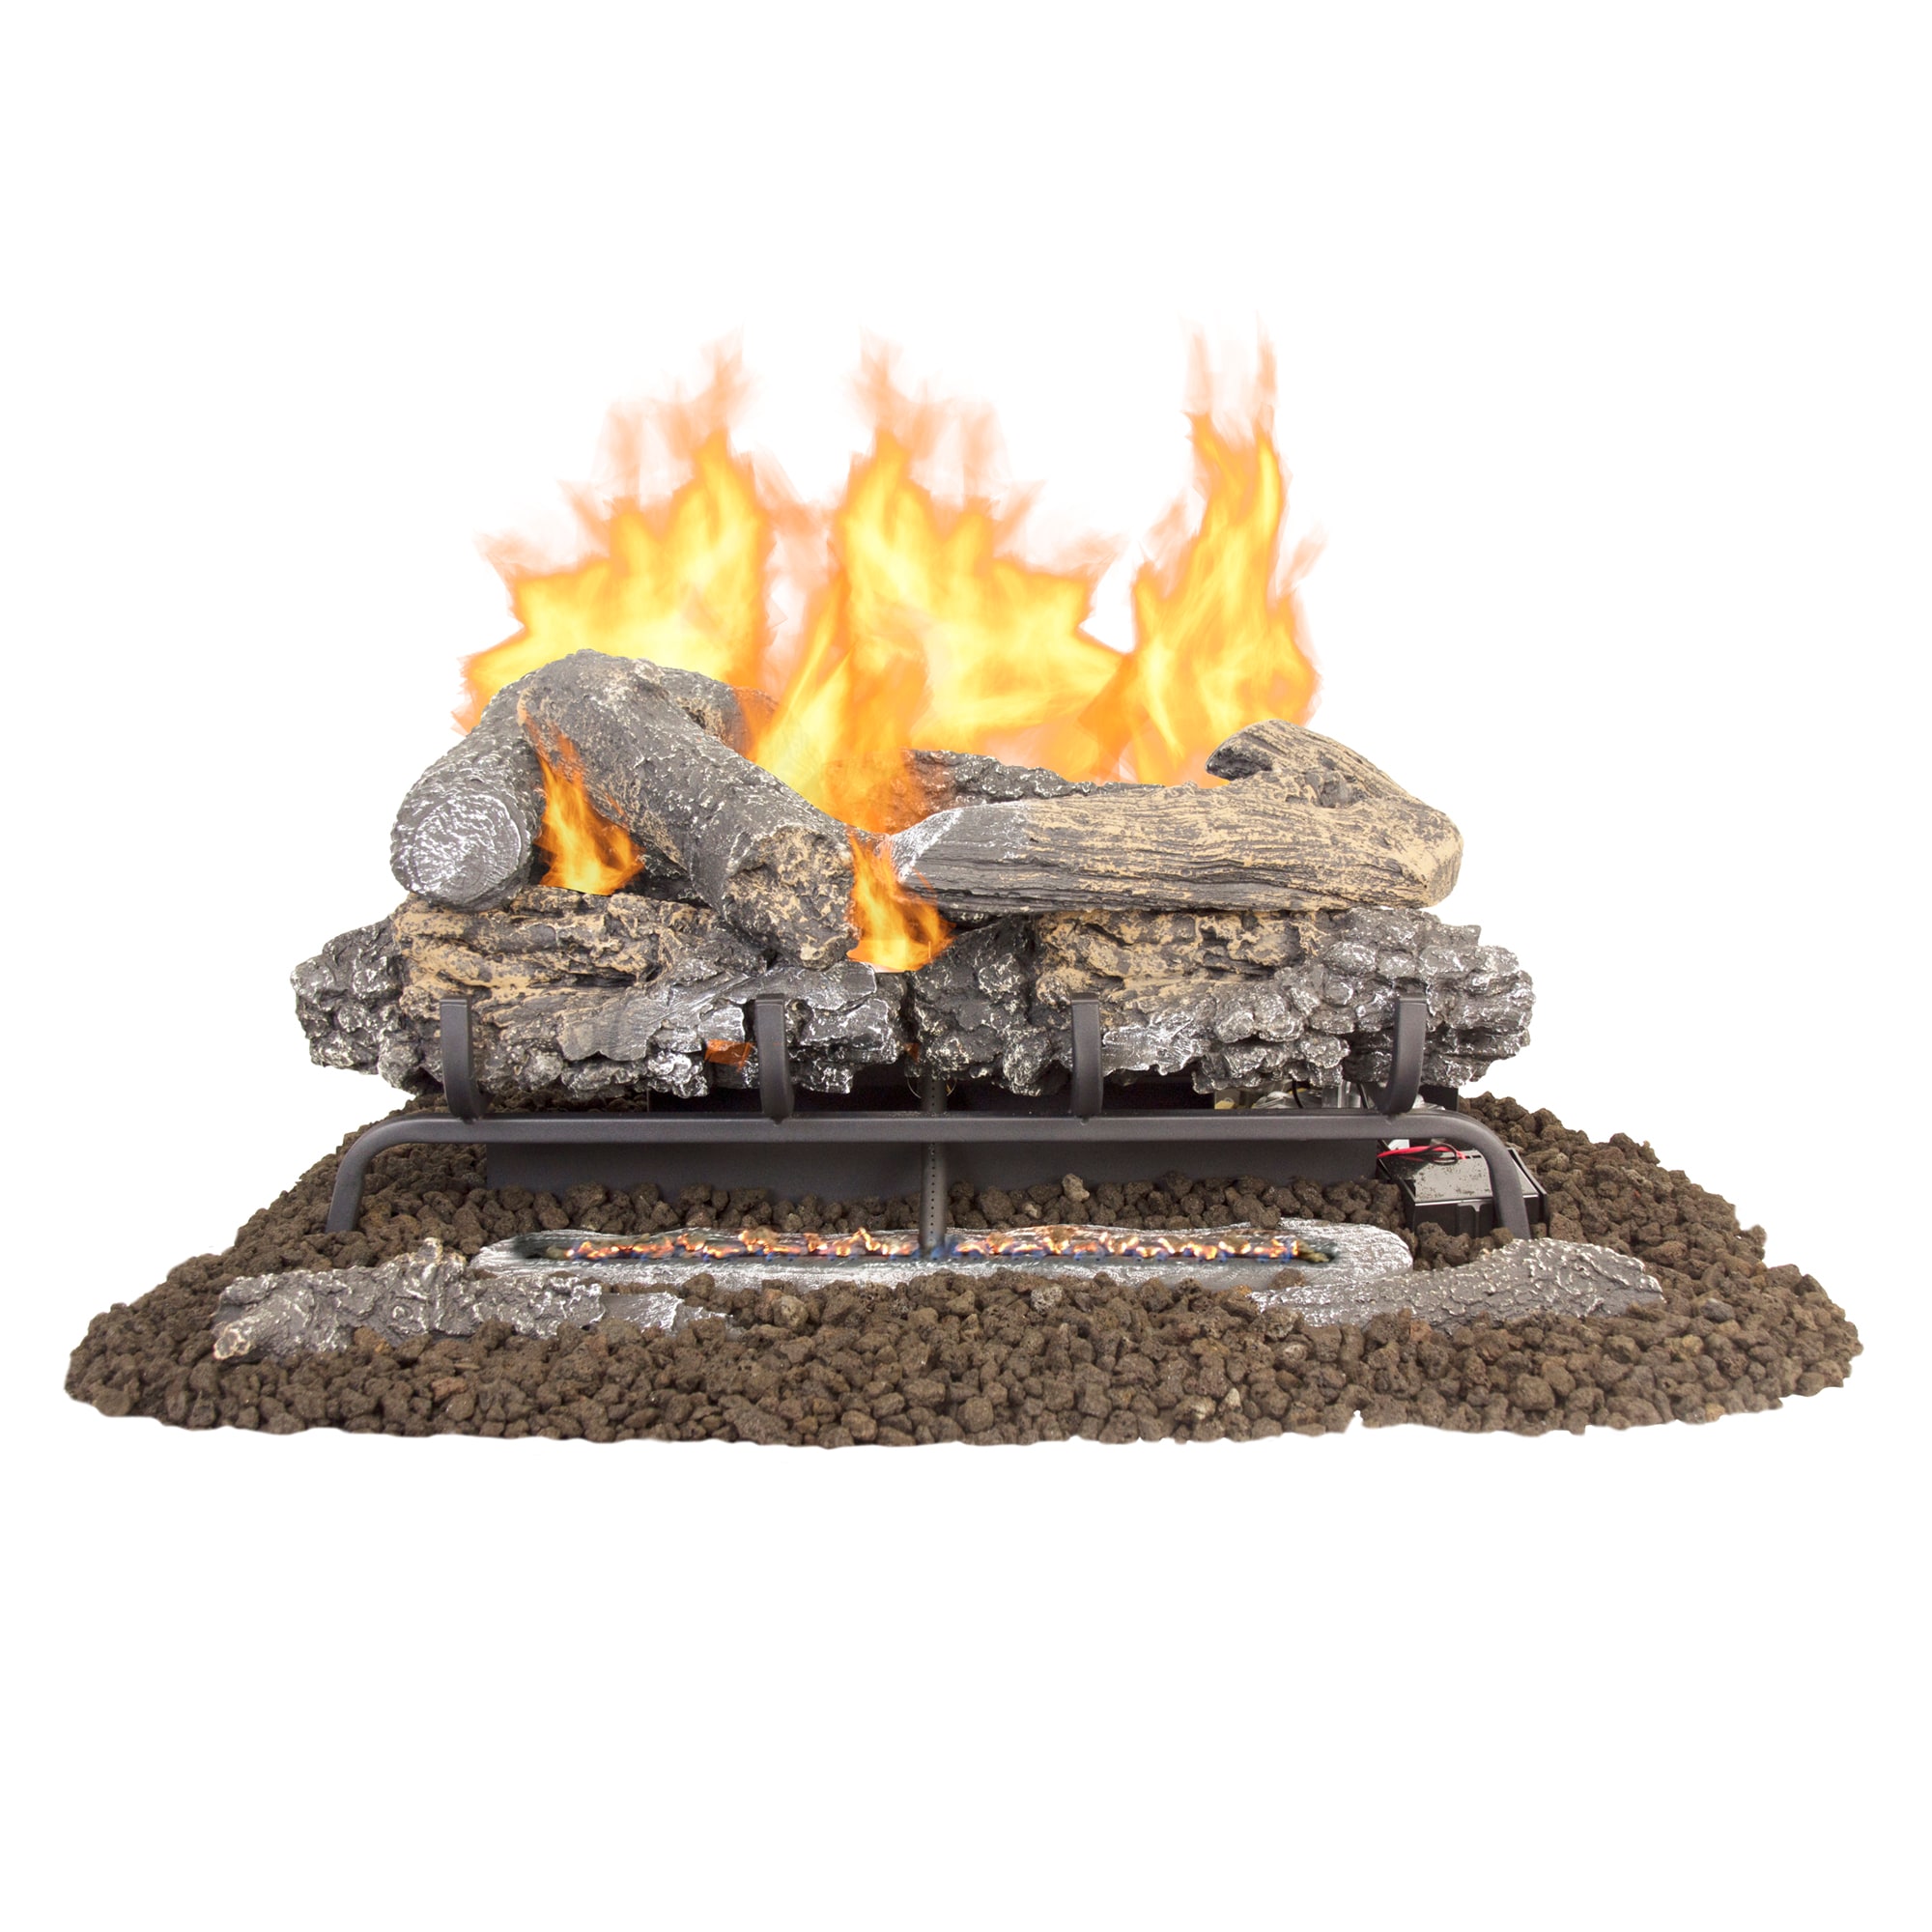 Gas Fireplace Logs, Propane Fireplace Replacement Logs